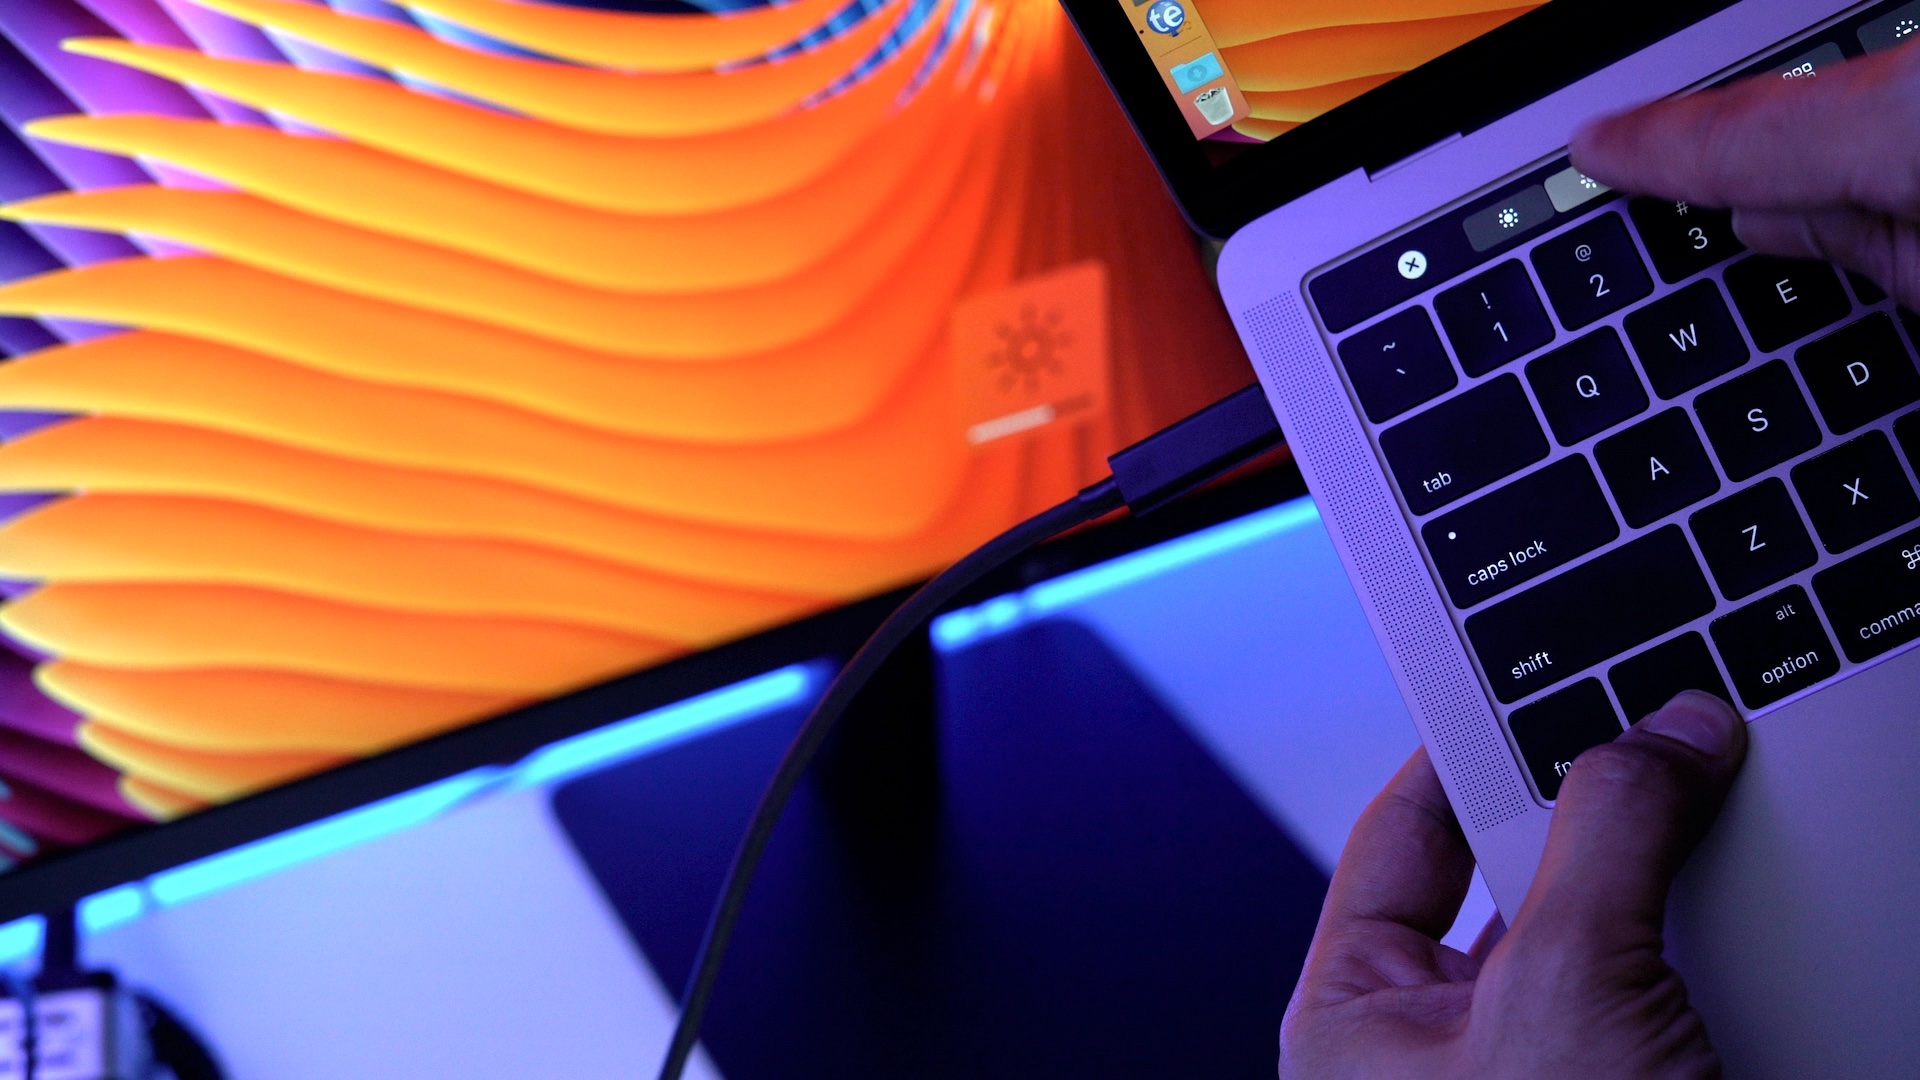 lg-ultrafine-display-brightness-adjust-macbook-pro-touch-bar